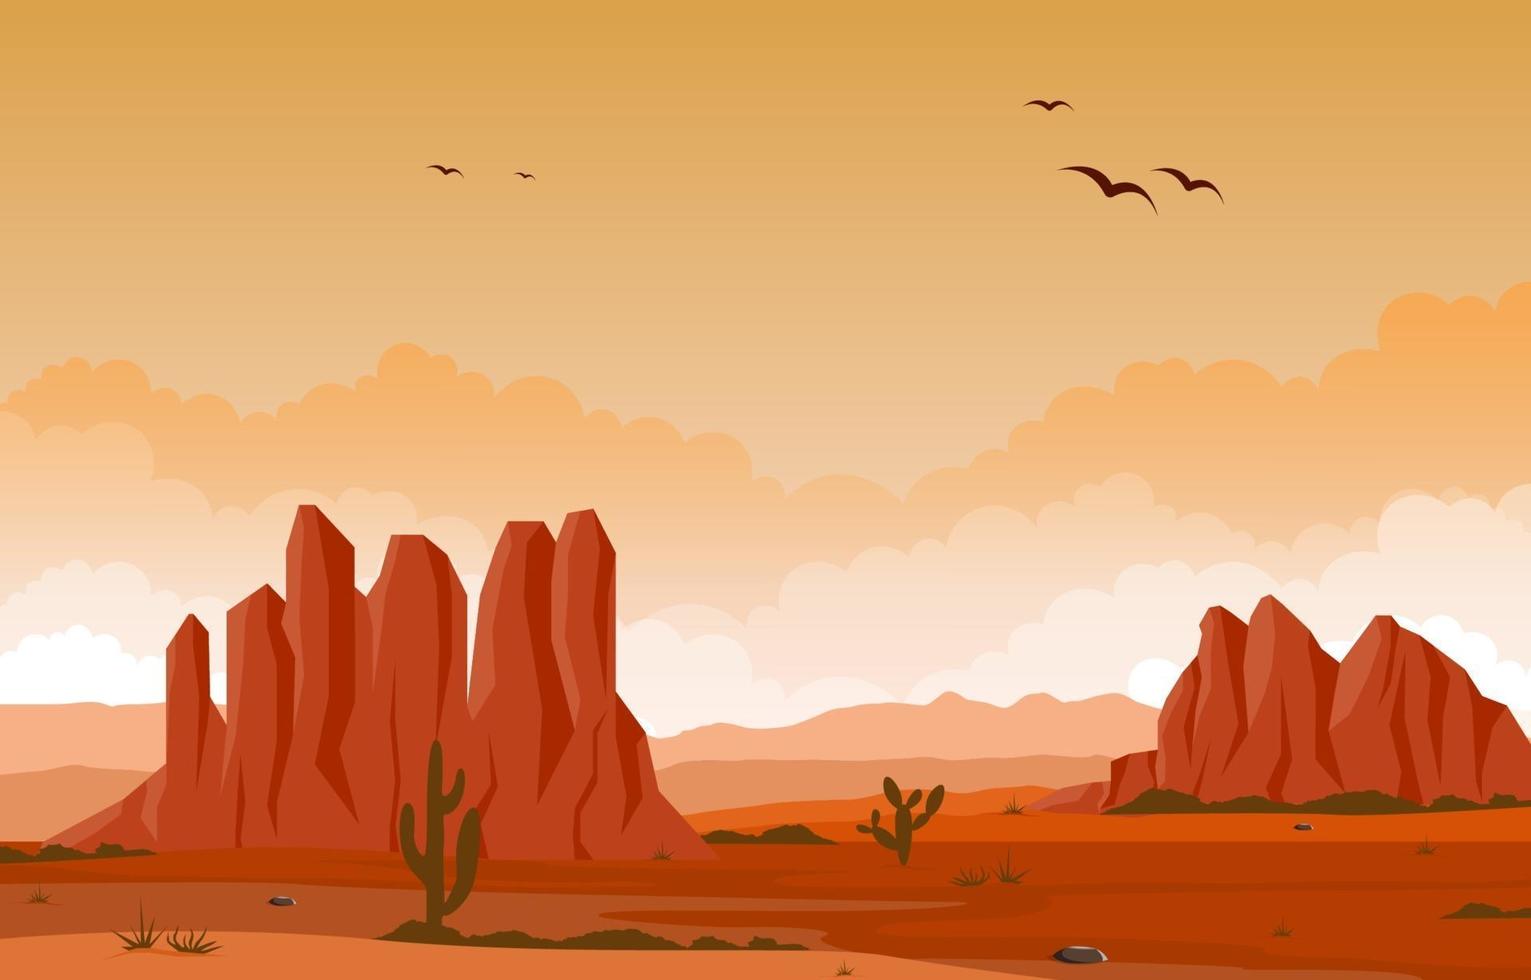 Day in Vast Western American Desert with Cactus Horizon Landscape Illustration vector